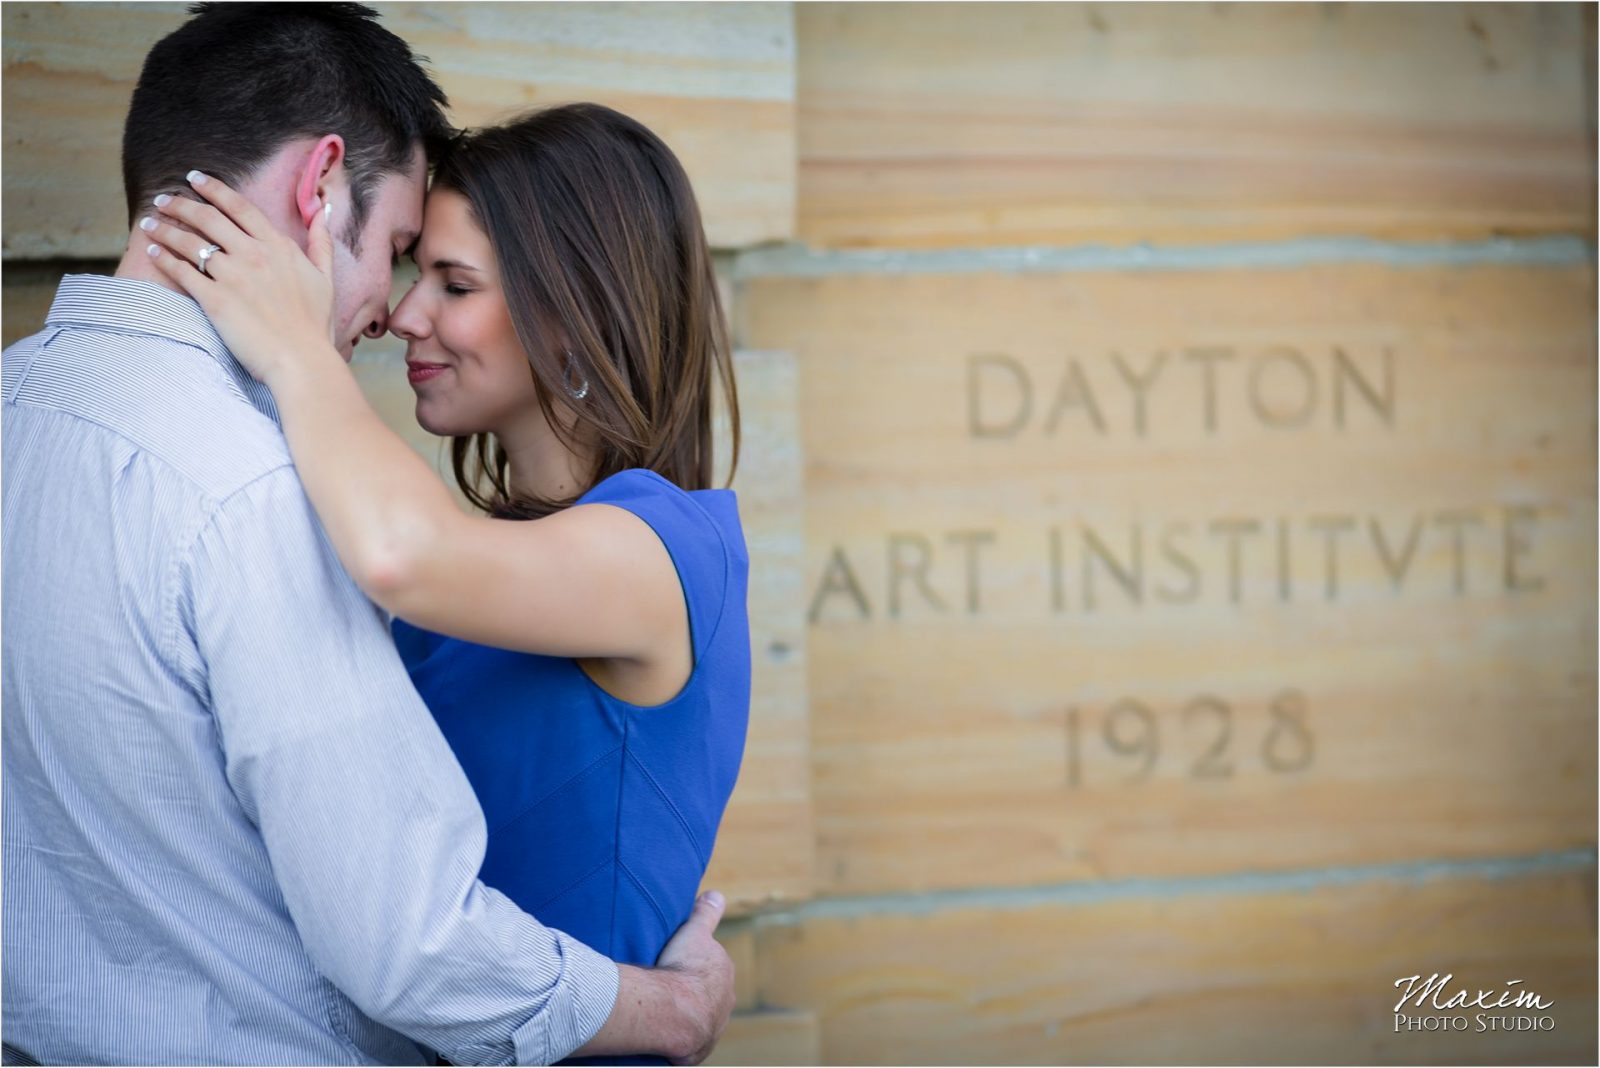 Dayton Art Institute Engagement Photography